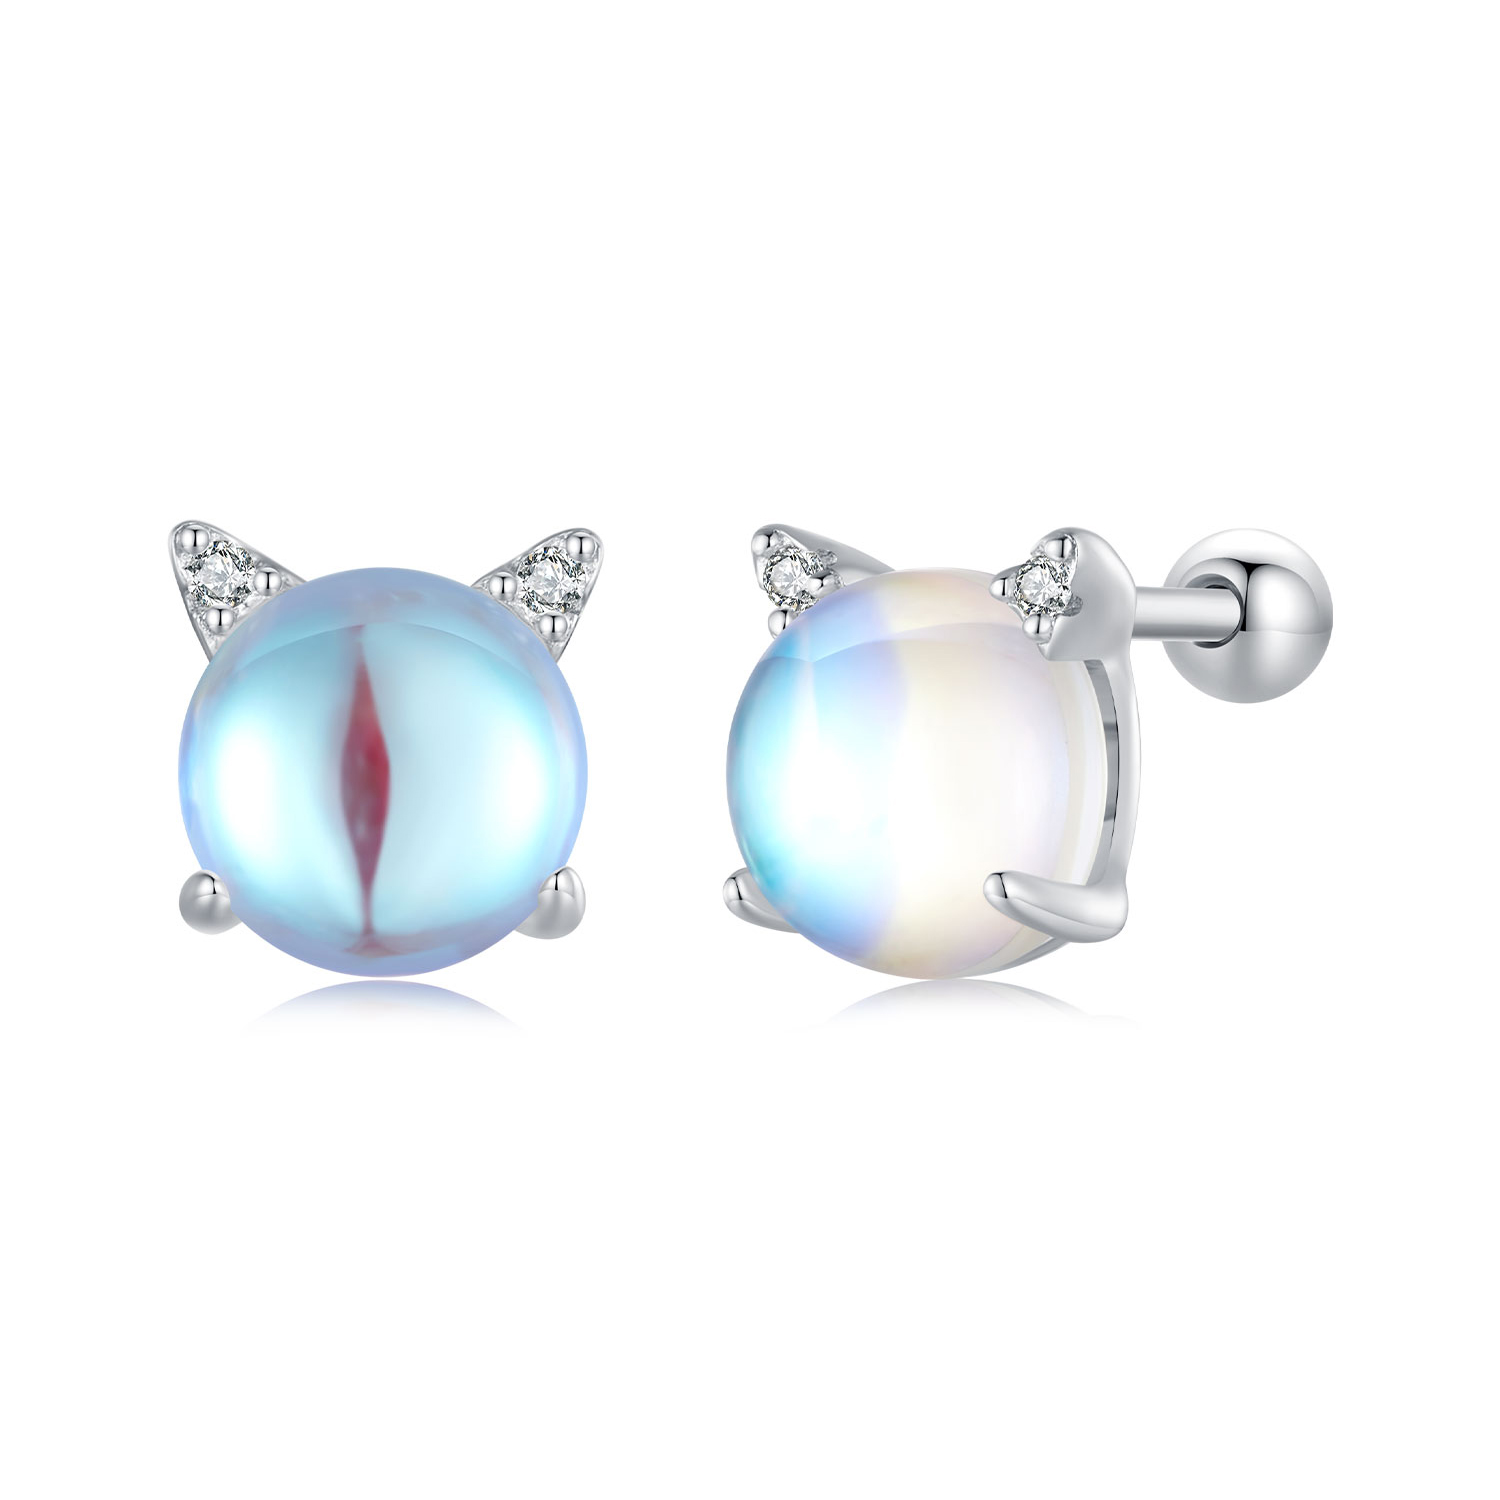 pandora style cat moonstone studs earrings sce1622